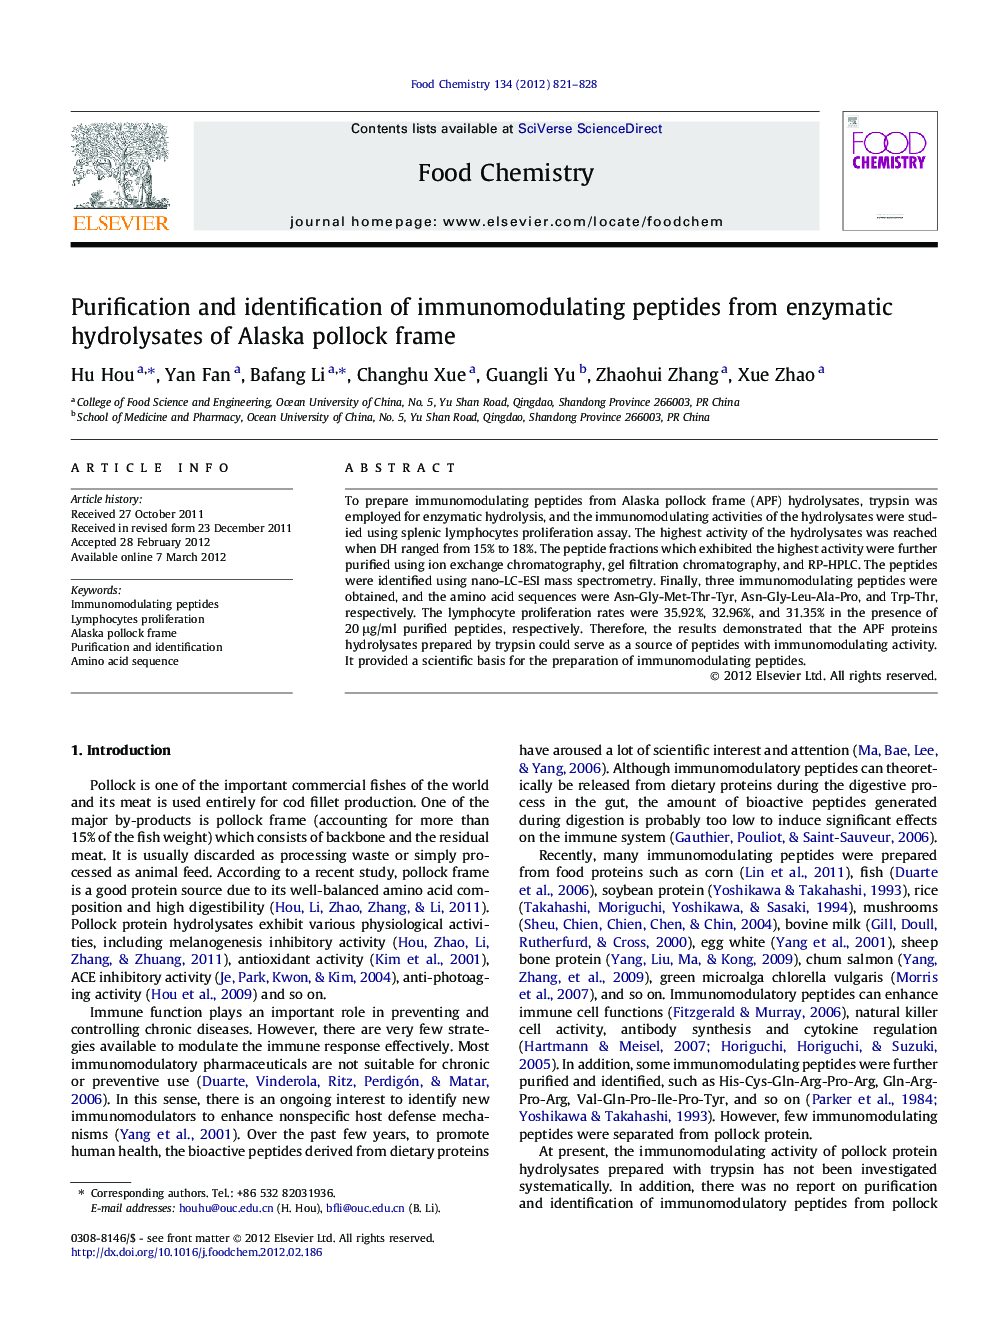 Purification and identification of immunomodulating peptides from enzymatic hydrolysates of Alaska pollock frame